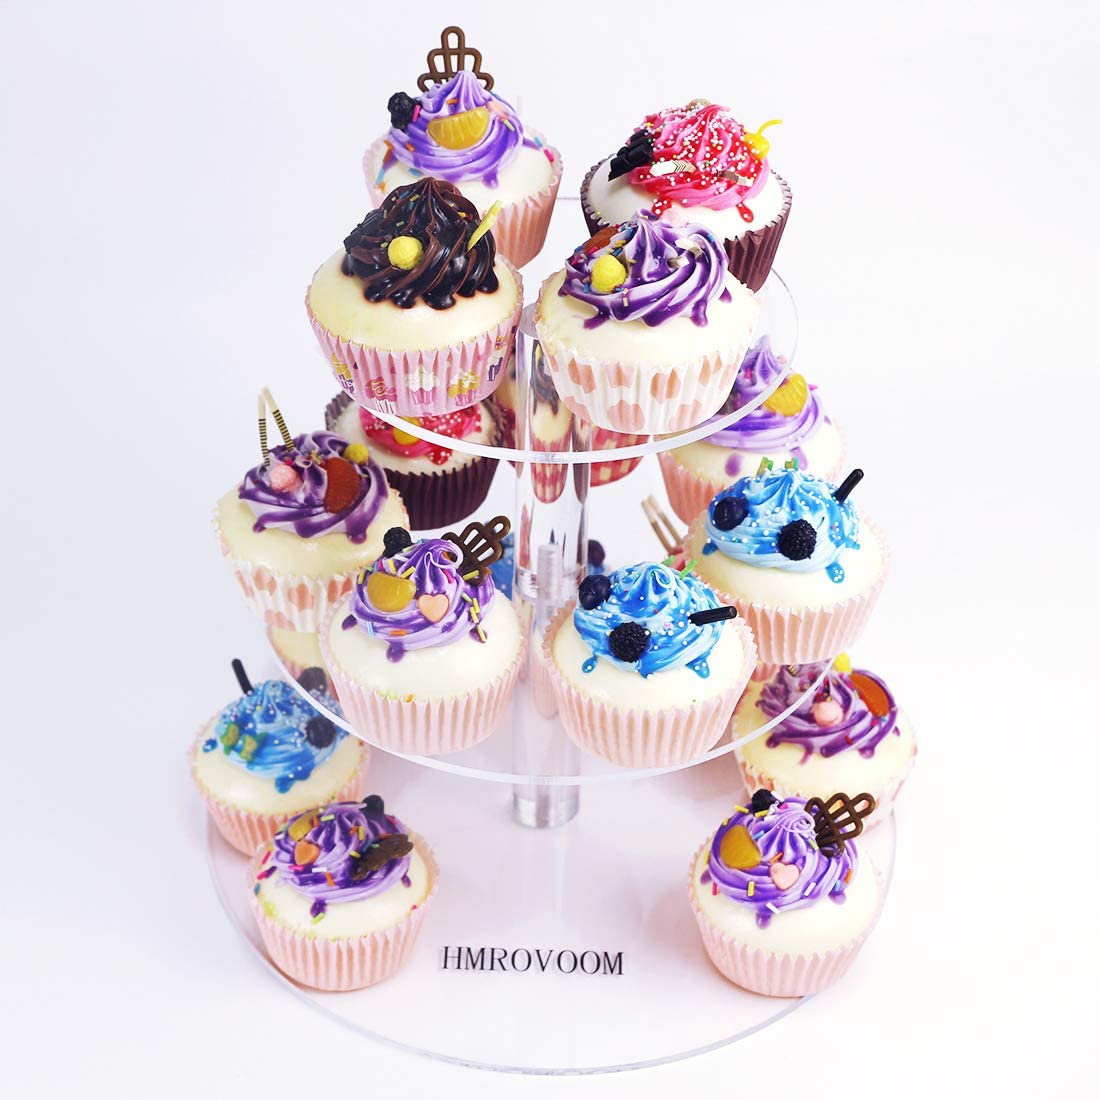 HMROVOOM 3 Tier Round Acrylic Cupcake Stand,Cake Holder Rack for Wedding Party Birthday